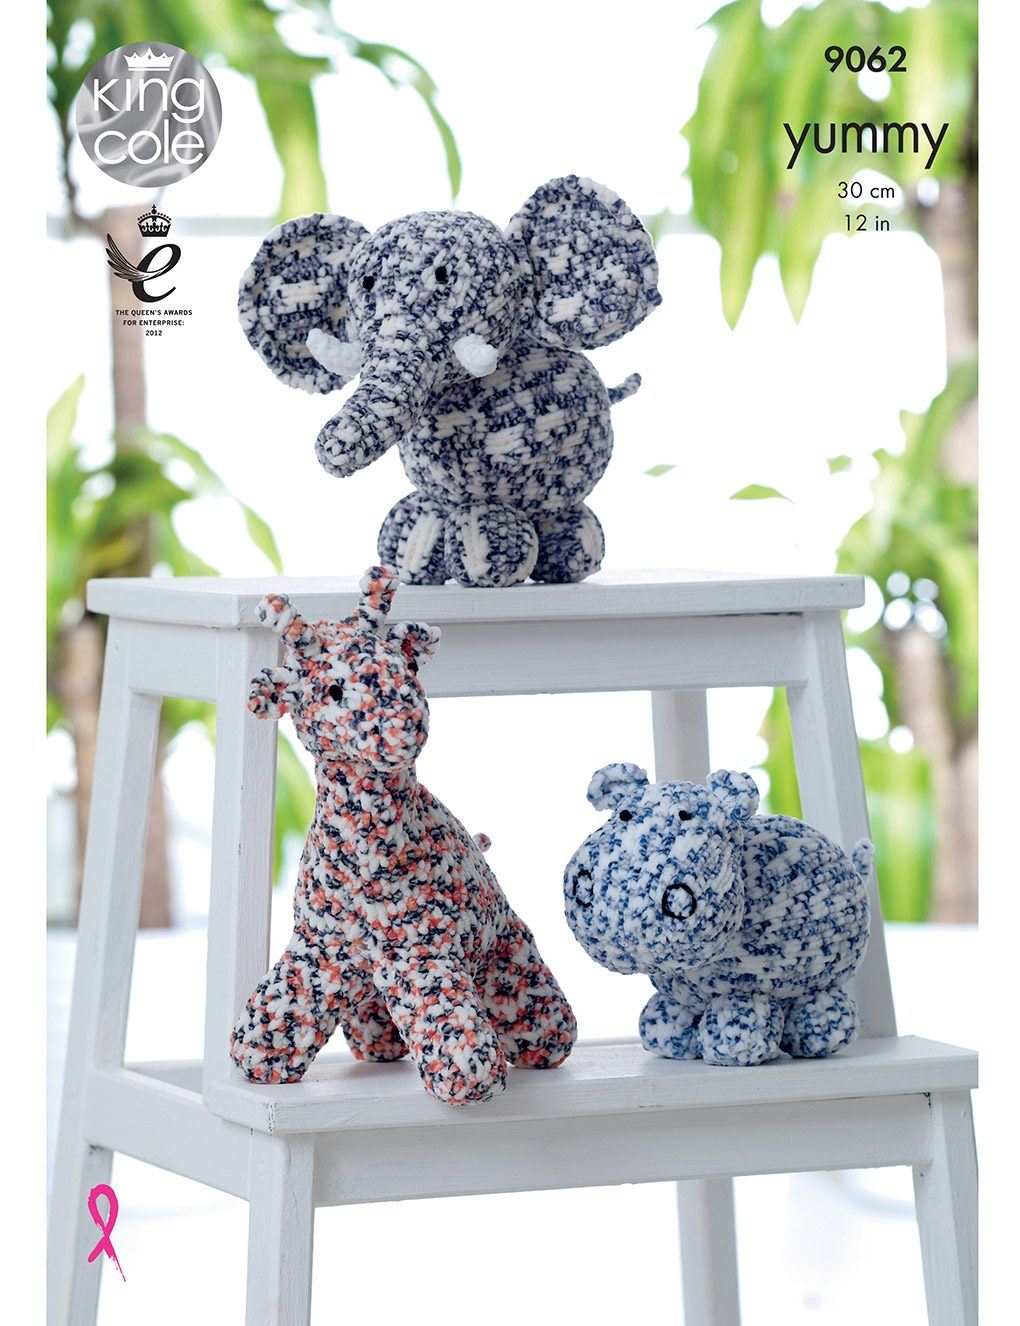 King Cole Yummy knitting pattern (9062) giraffe, hippo, elephant toys